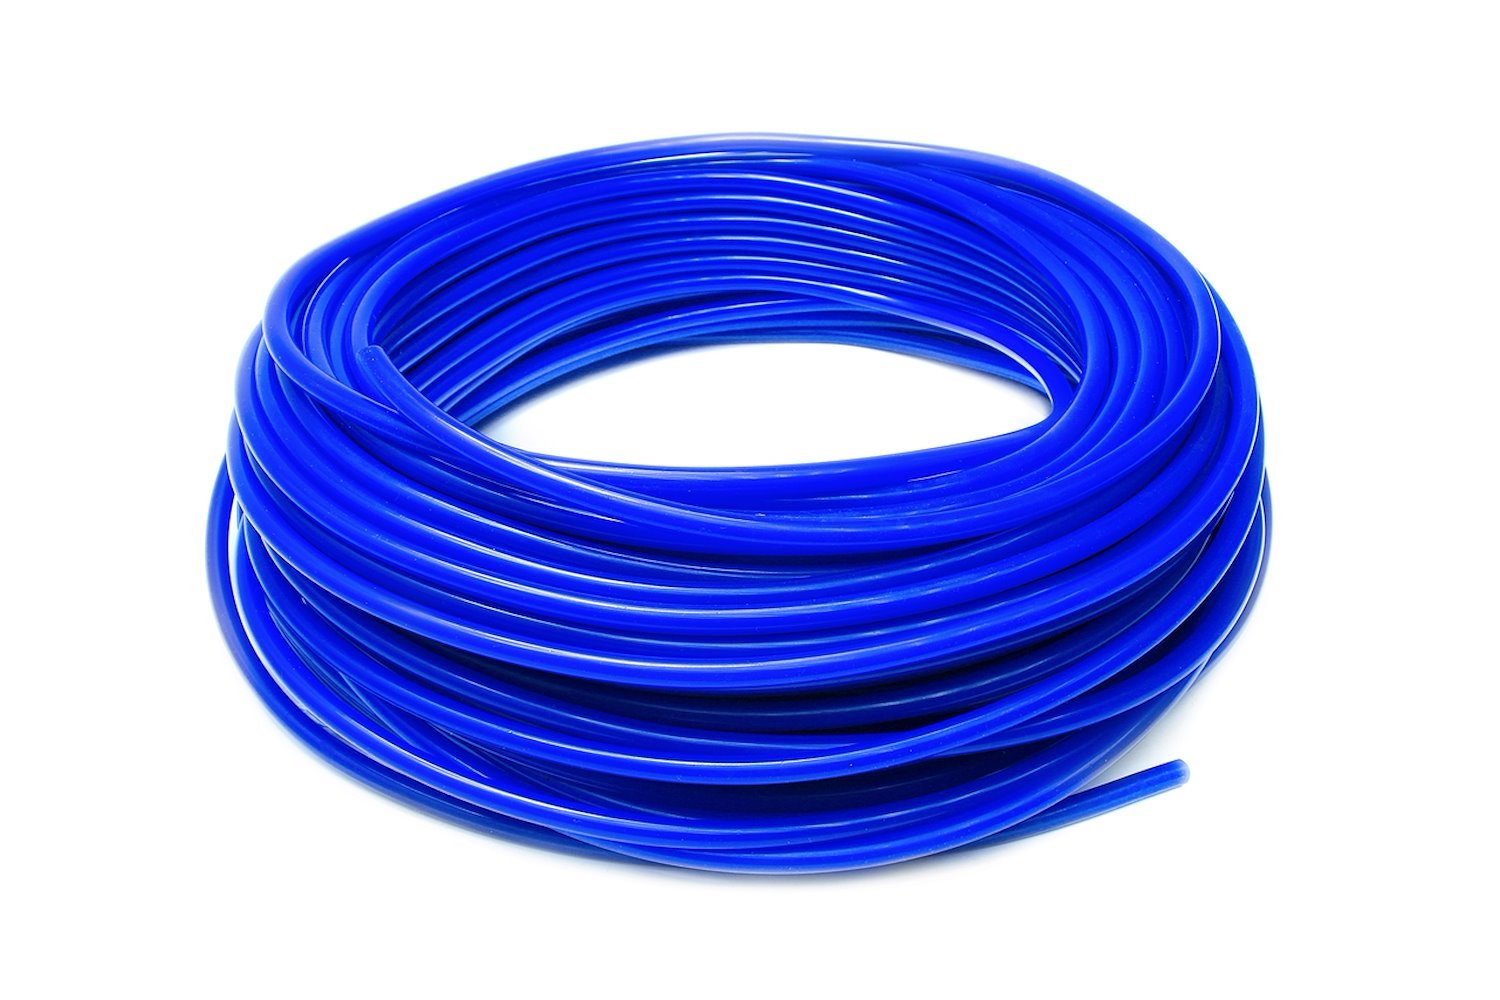 HTSVH3TW-BLUEx100 High-Temperature Silicone Vacuum Hose Tubing, 1/8 in. ID, 100 ft. Roll, Blue